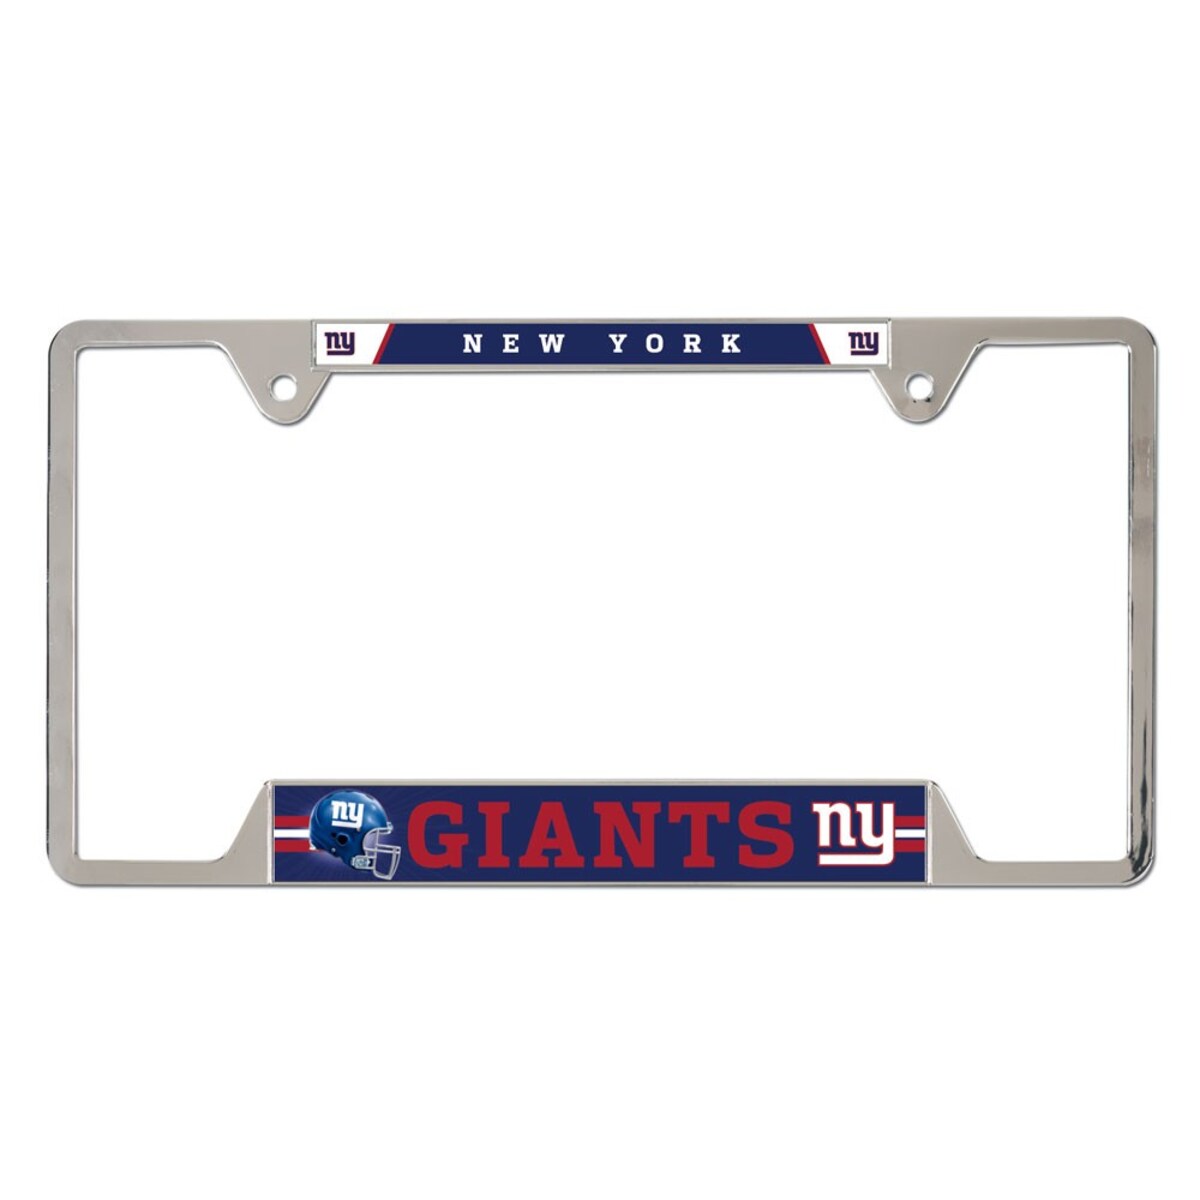 NFL ジャイアンツ カー用品・カーアクセサリー ウィンクラフト (Metal License Plate Frame)